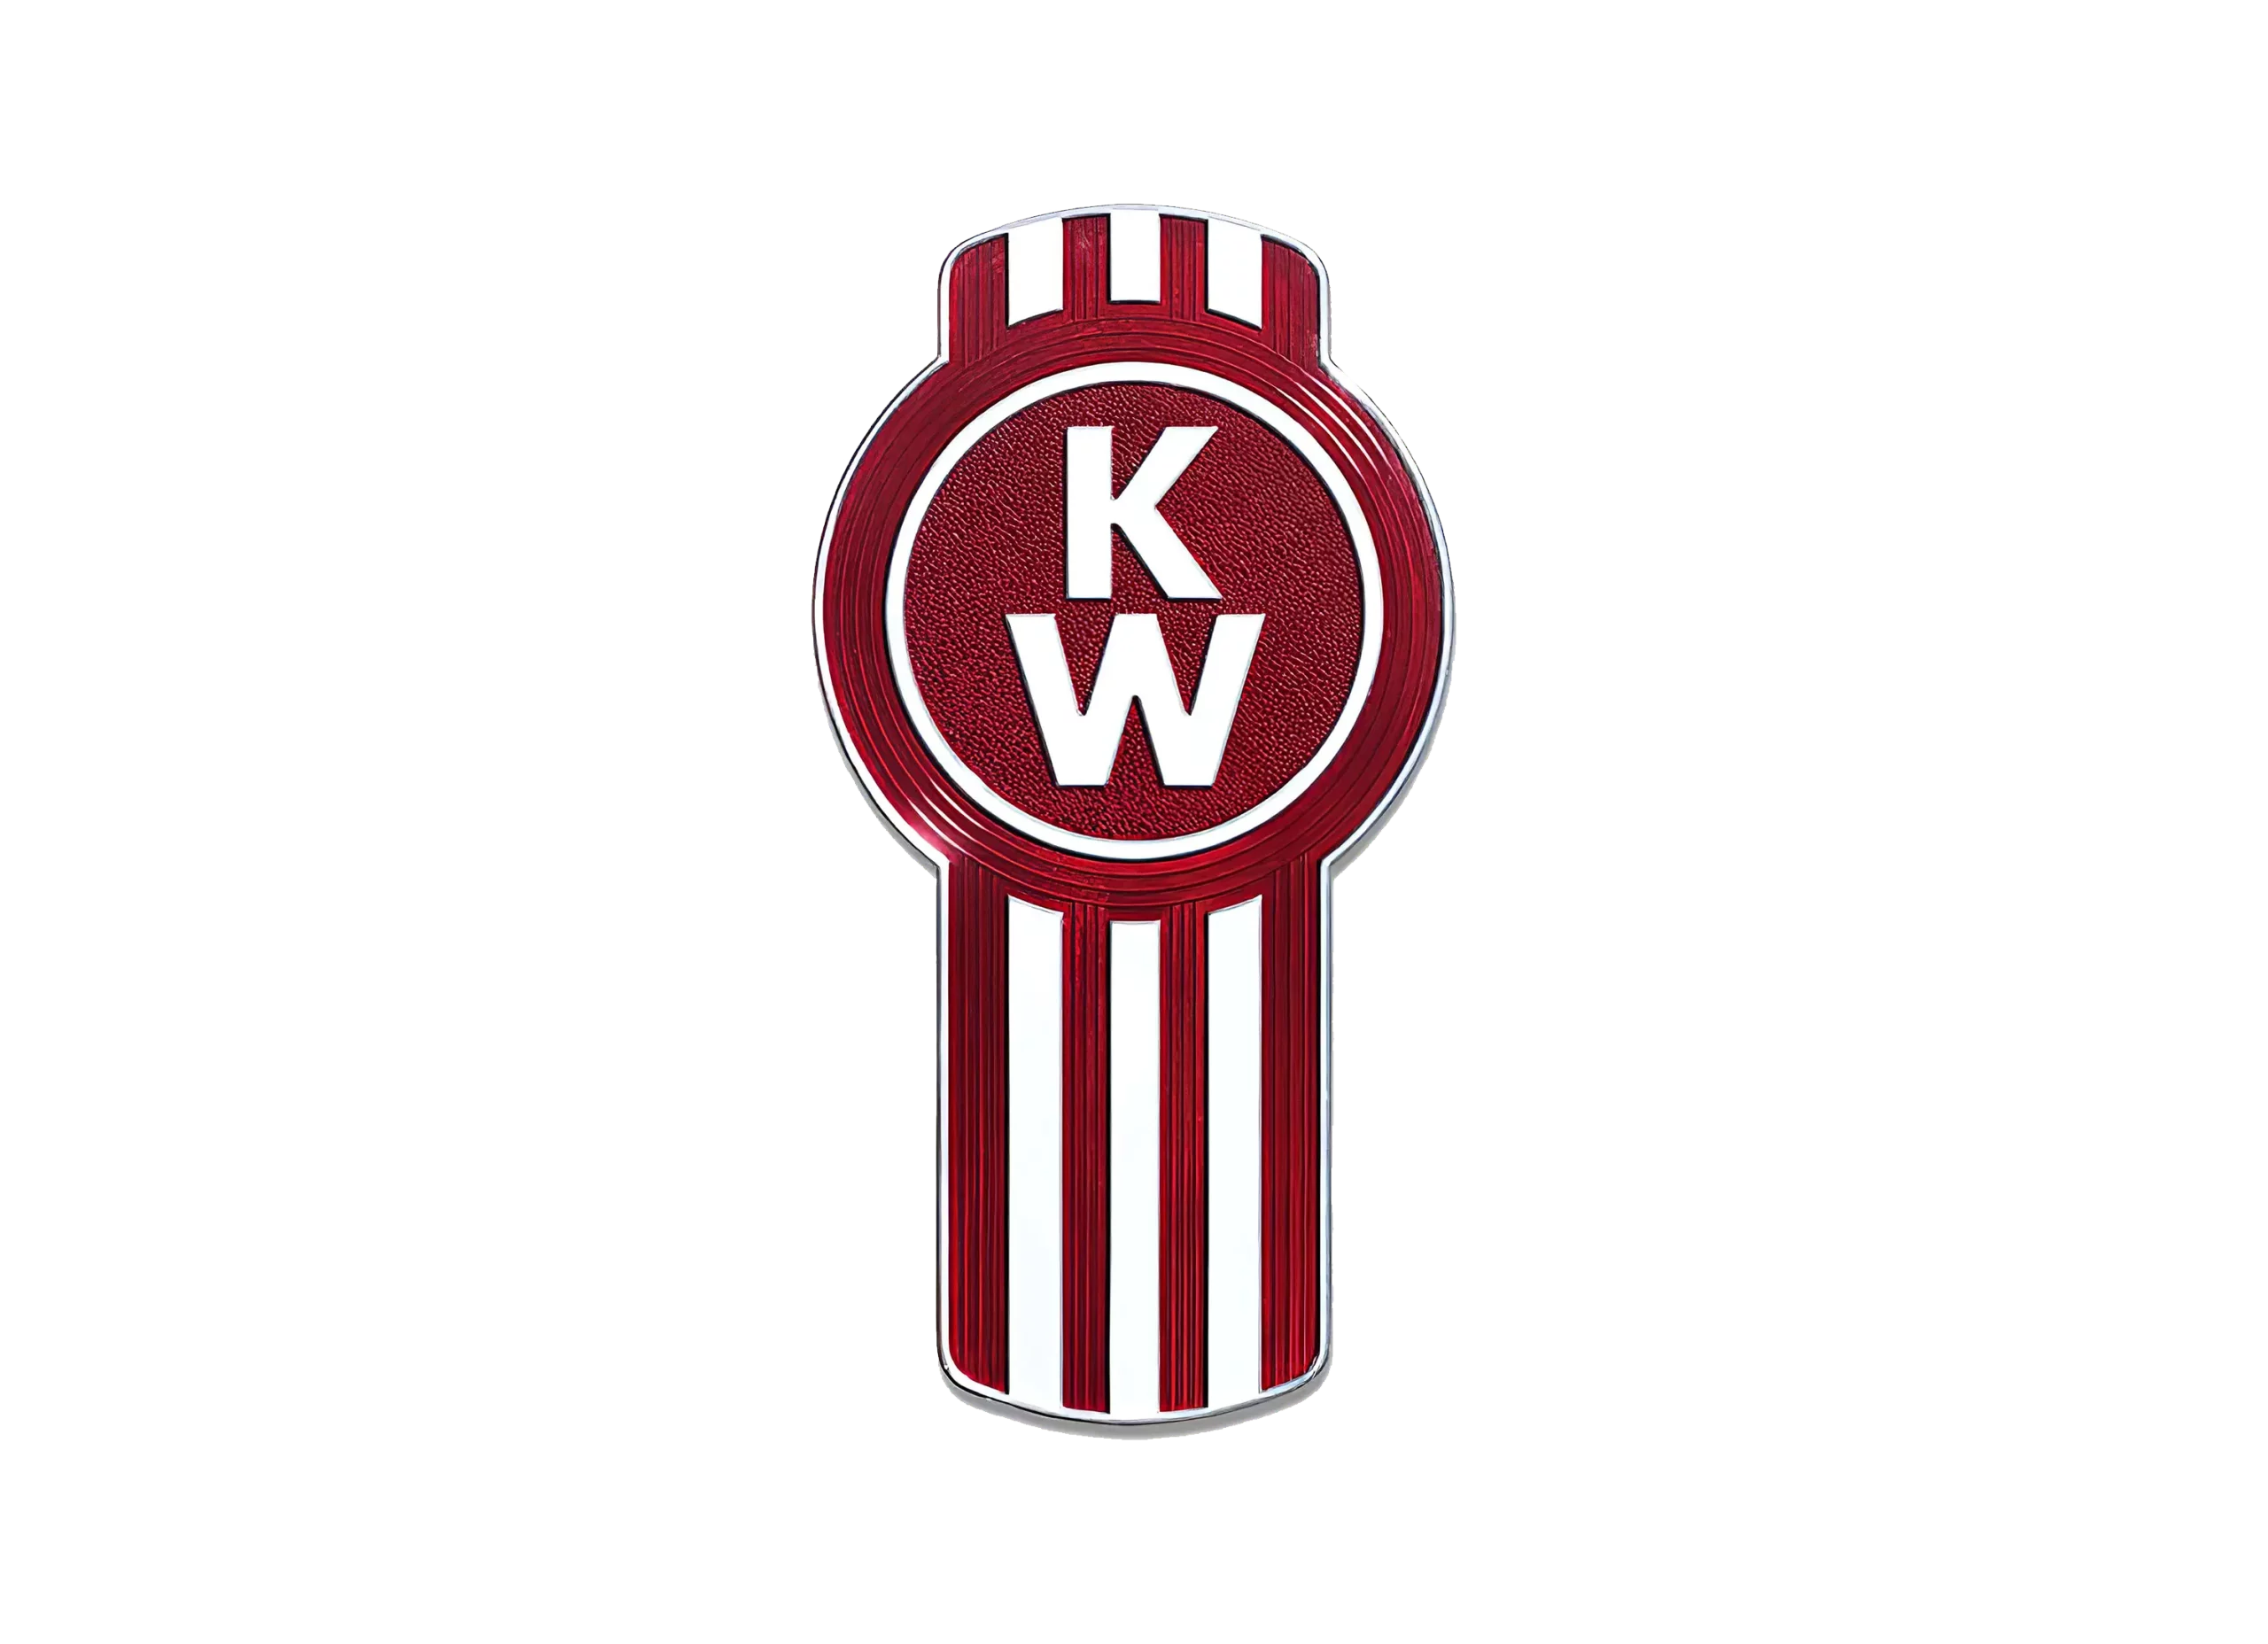 Kenworth logo 1956-present